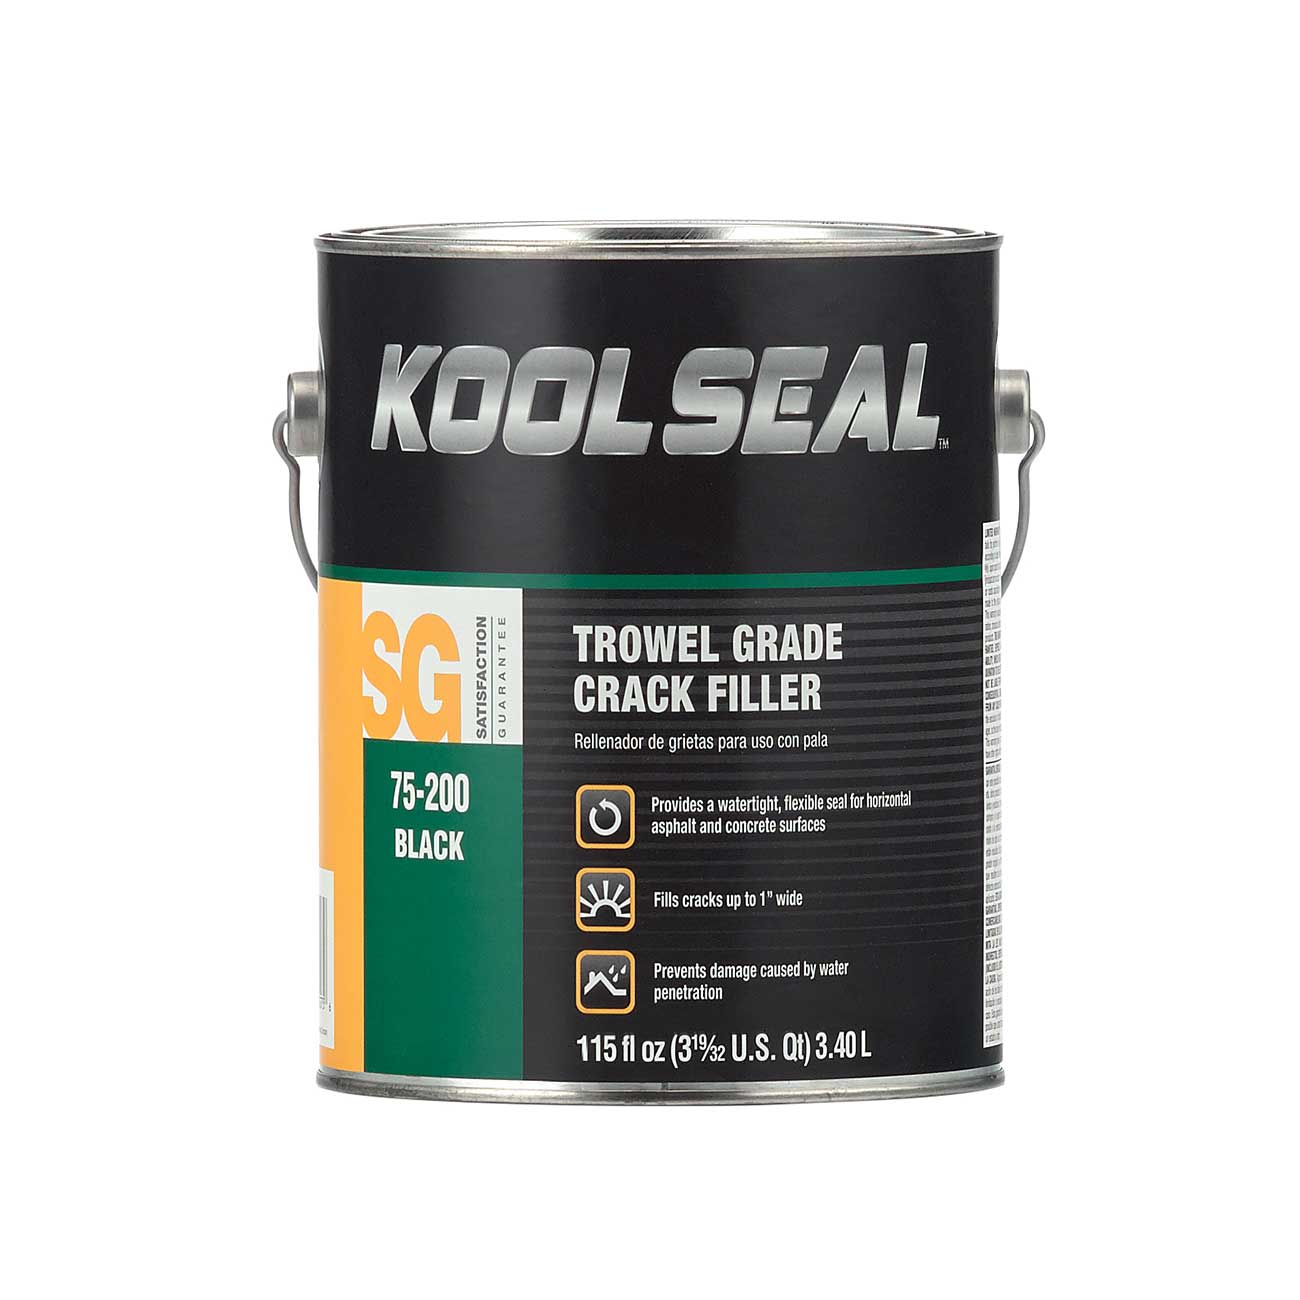 Kool Seal Trowel Grade Crack Filler